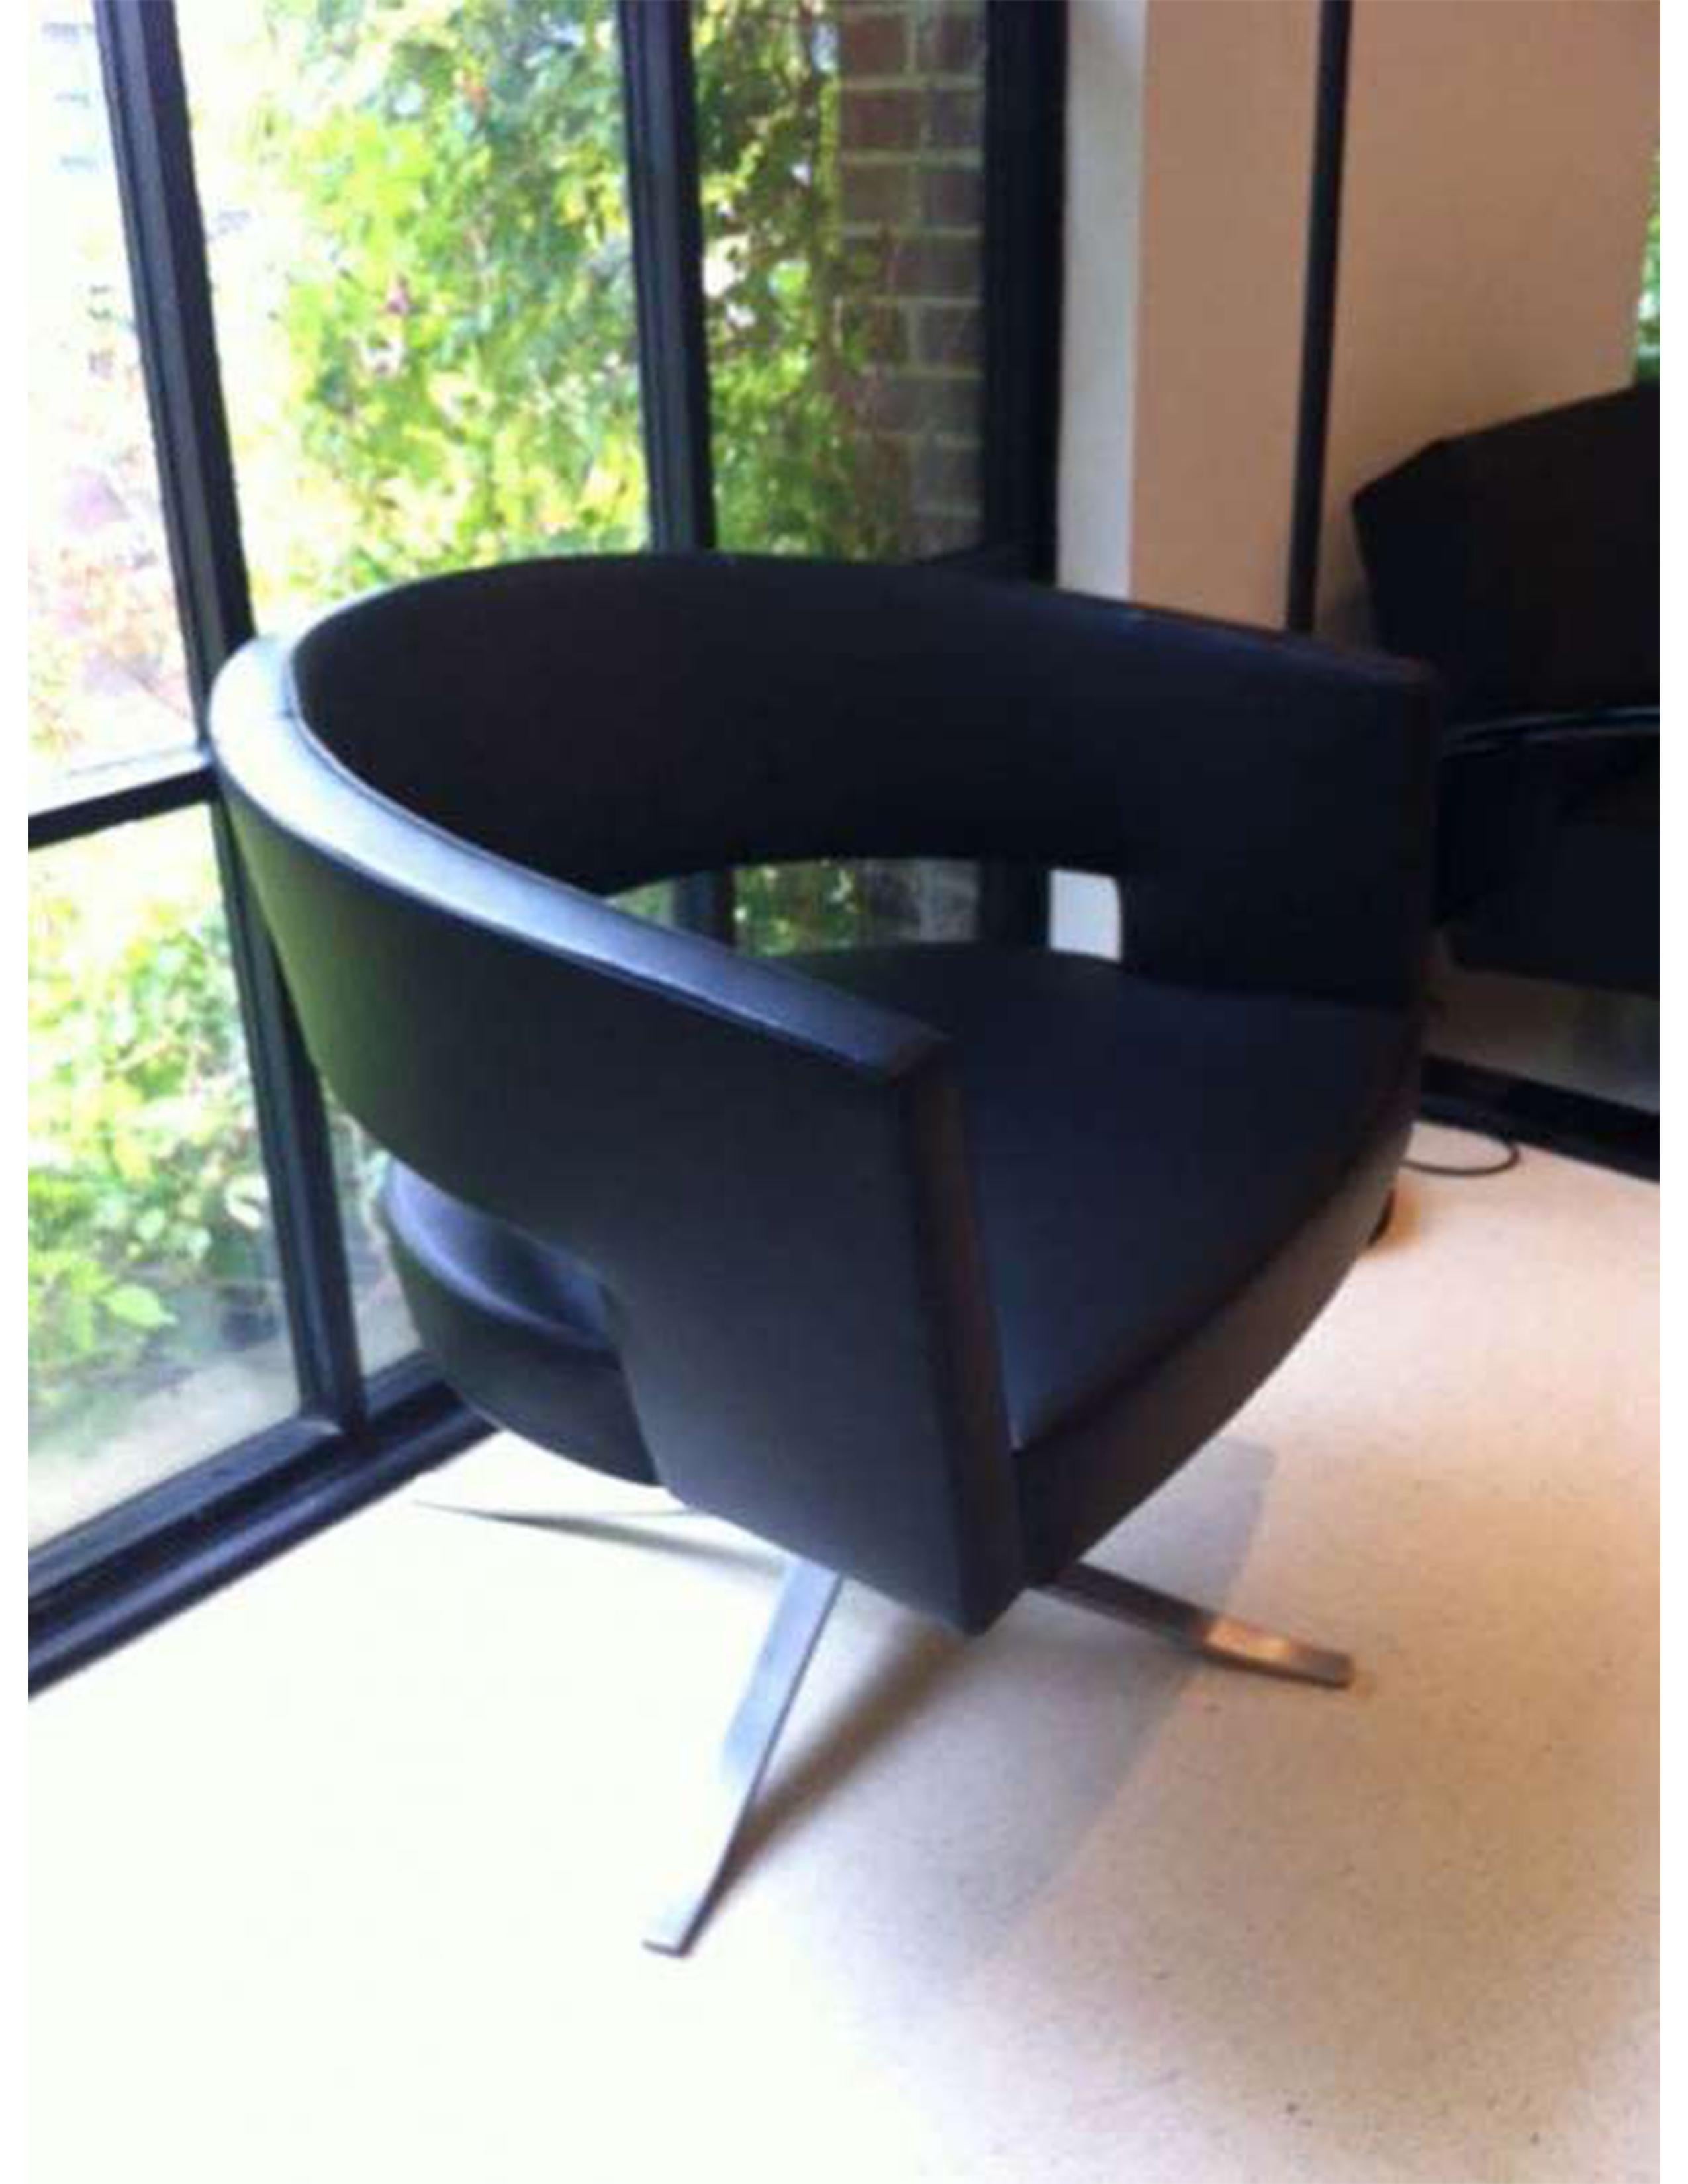 Montis turner chair
4-star base
Black leather
Measures: 30 x 28.4 H, SH 16.9.

 